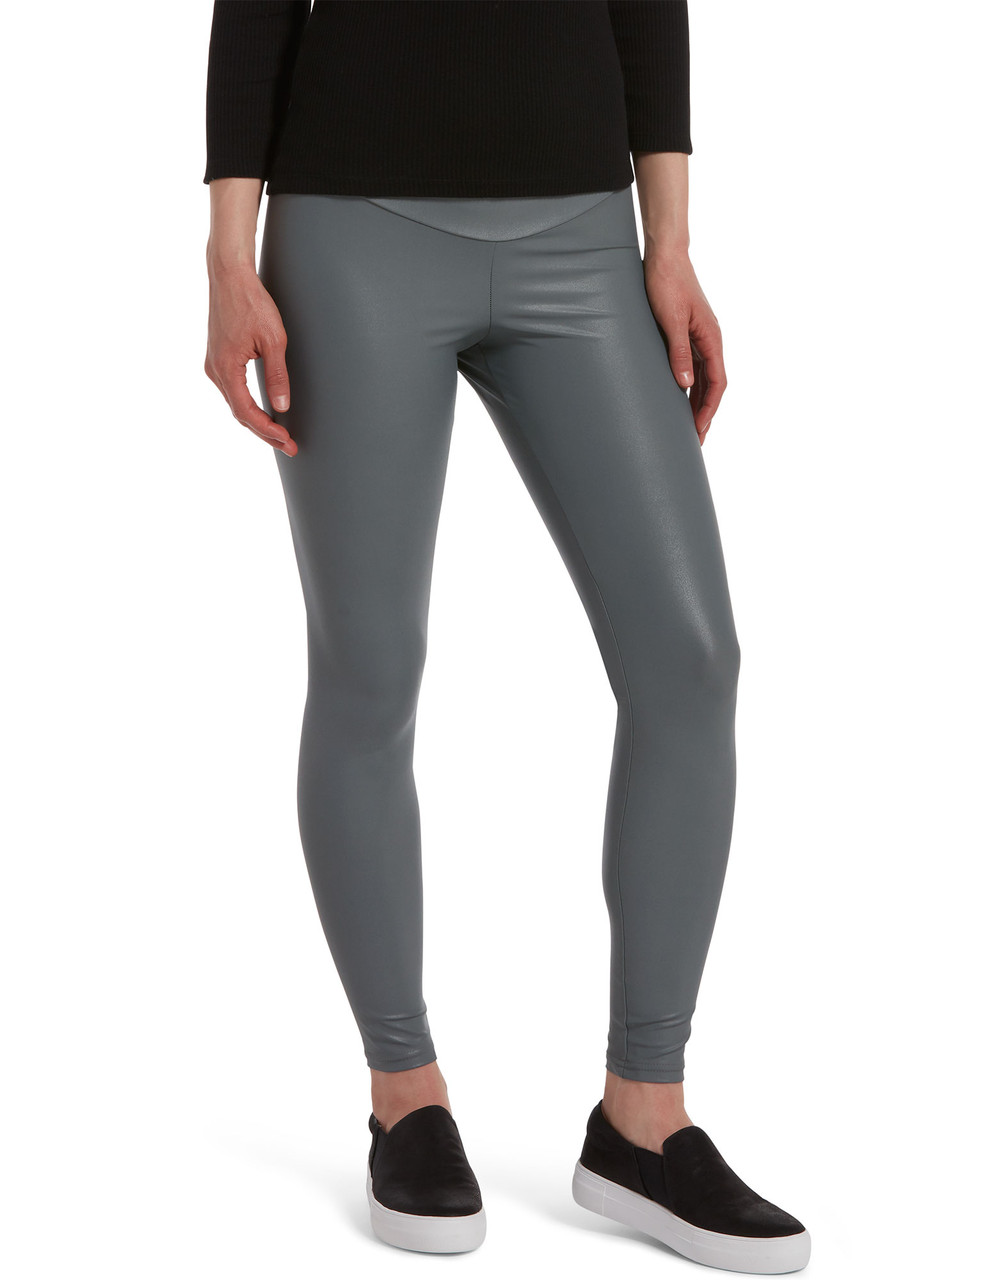 Wet Look Shiny Metallic Stretch Leggings Full Length Pants for Women Girls  - Iron Gray, as described 